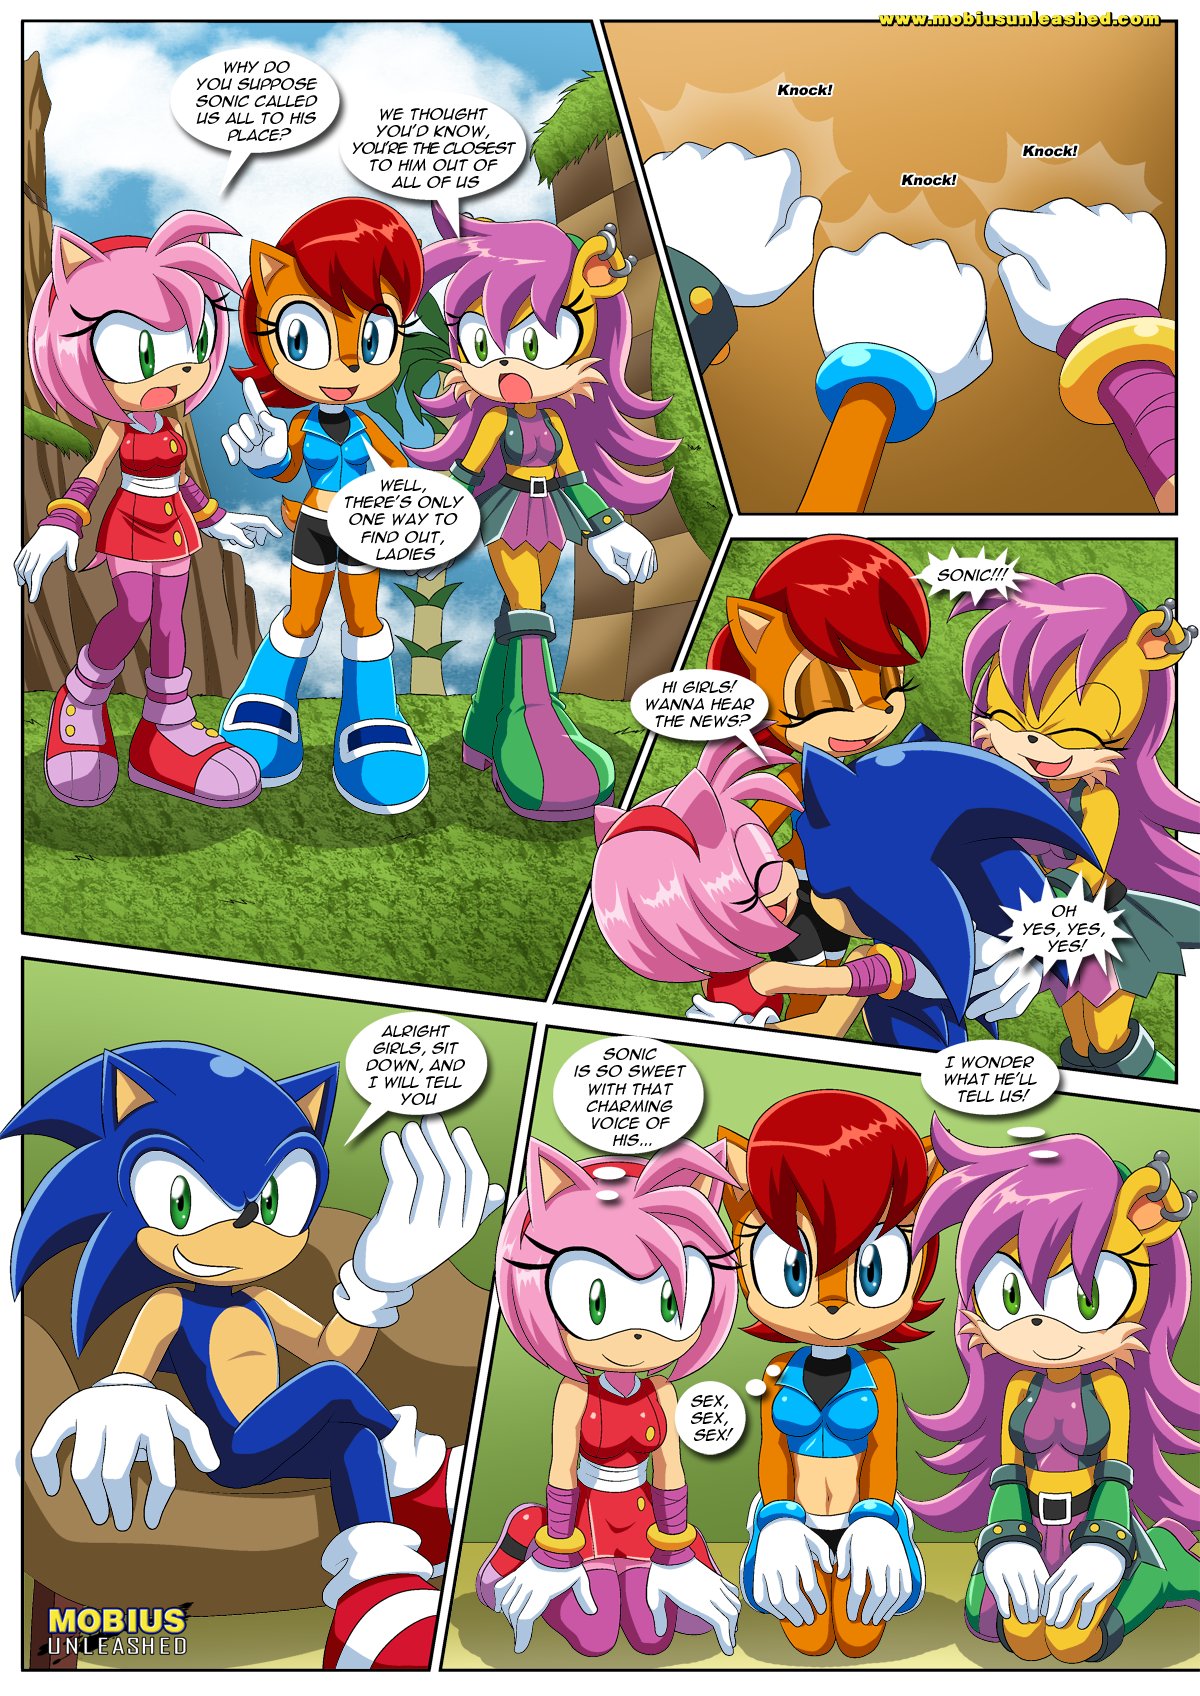 Sonic Threesome Porn - Sonic XXX Project 4 porn comic (sonic the hedgehog). [palcomix, mobius  unleashed] Ffm threesome porn comics.